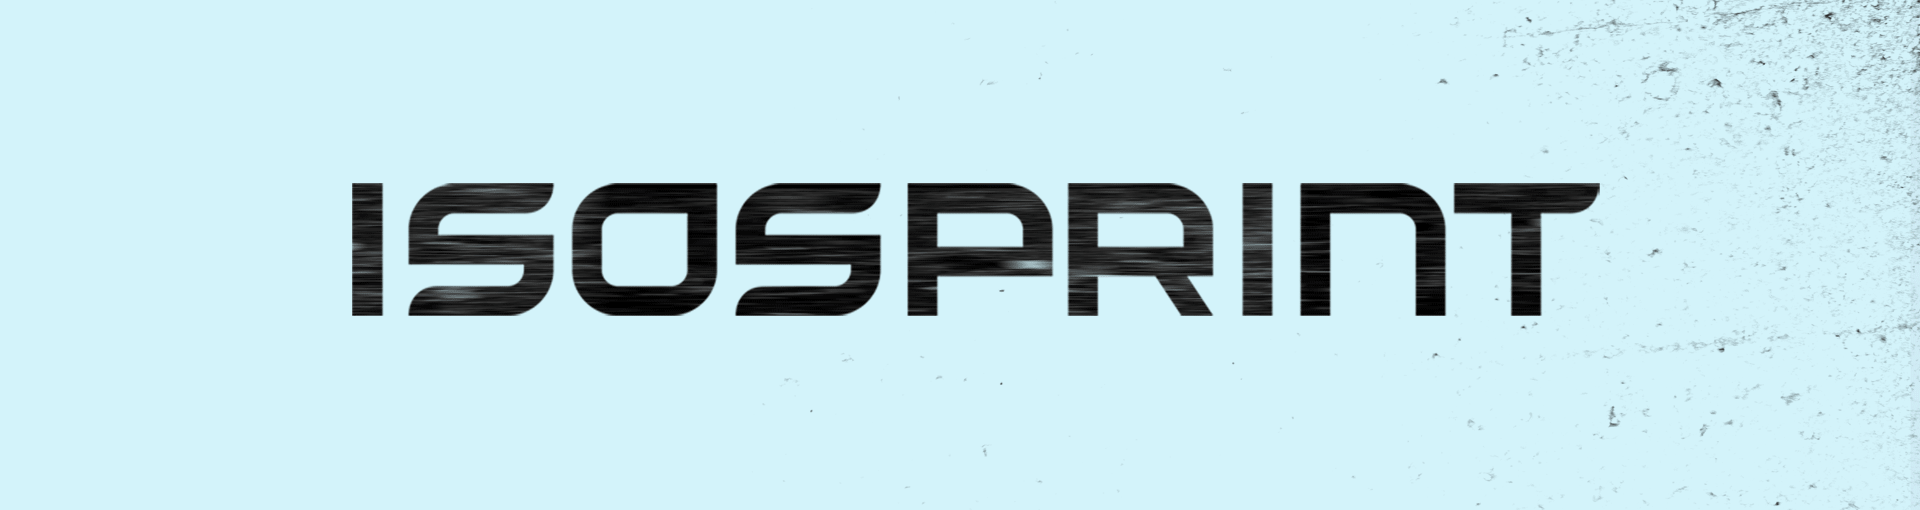 sprint logo gif